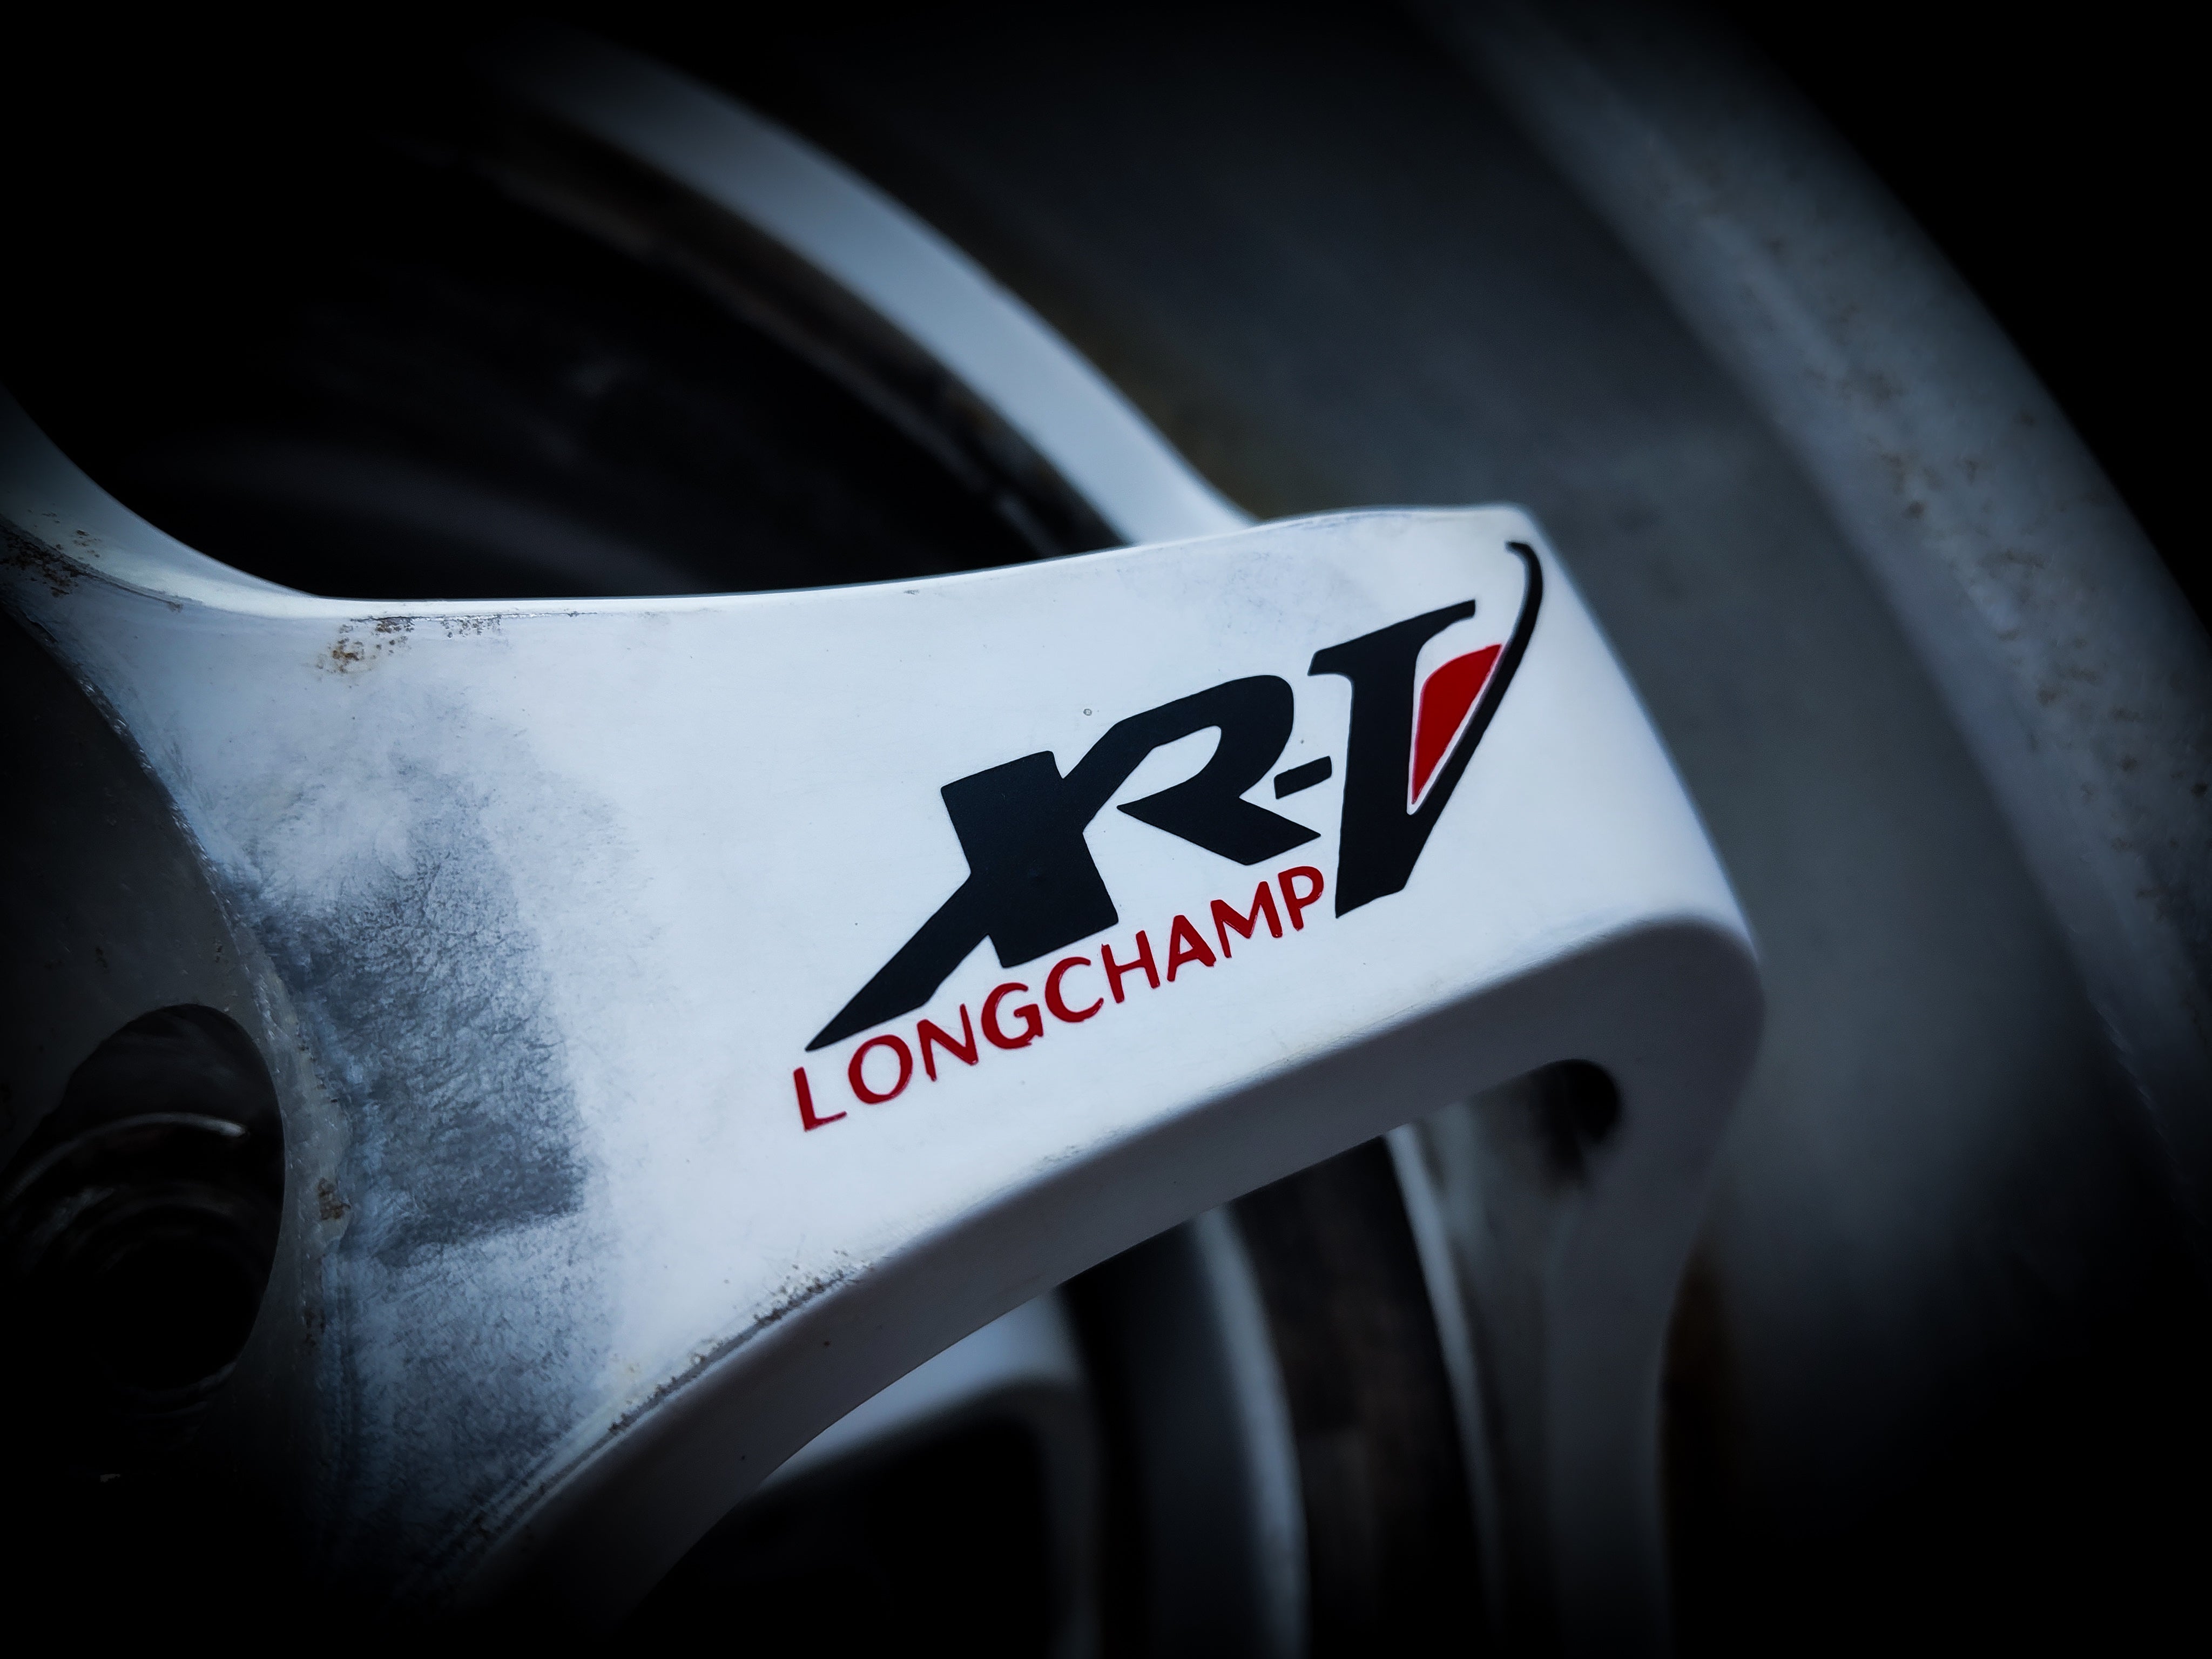 Desmond LONGCHAMP XR-V Rims/Wheels Replacement Spoke Decal Kit